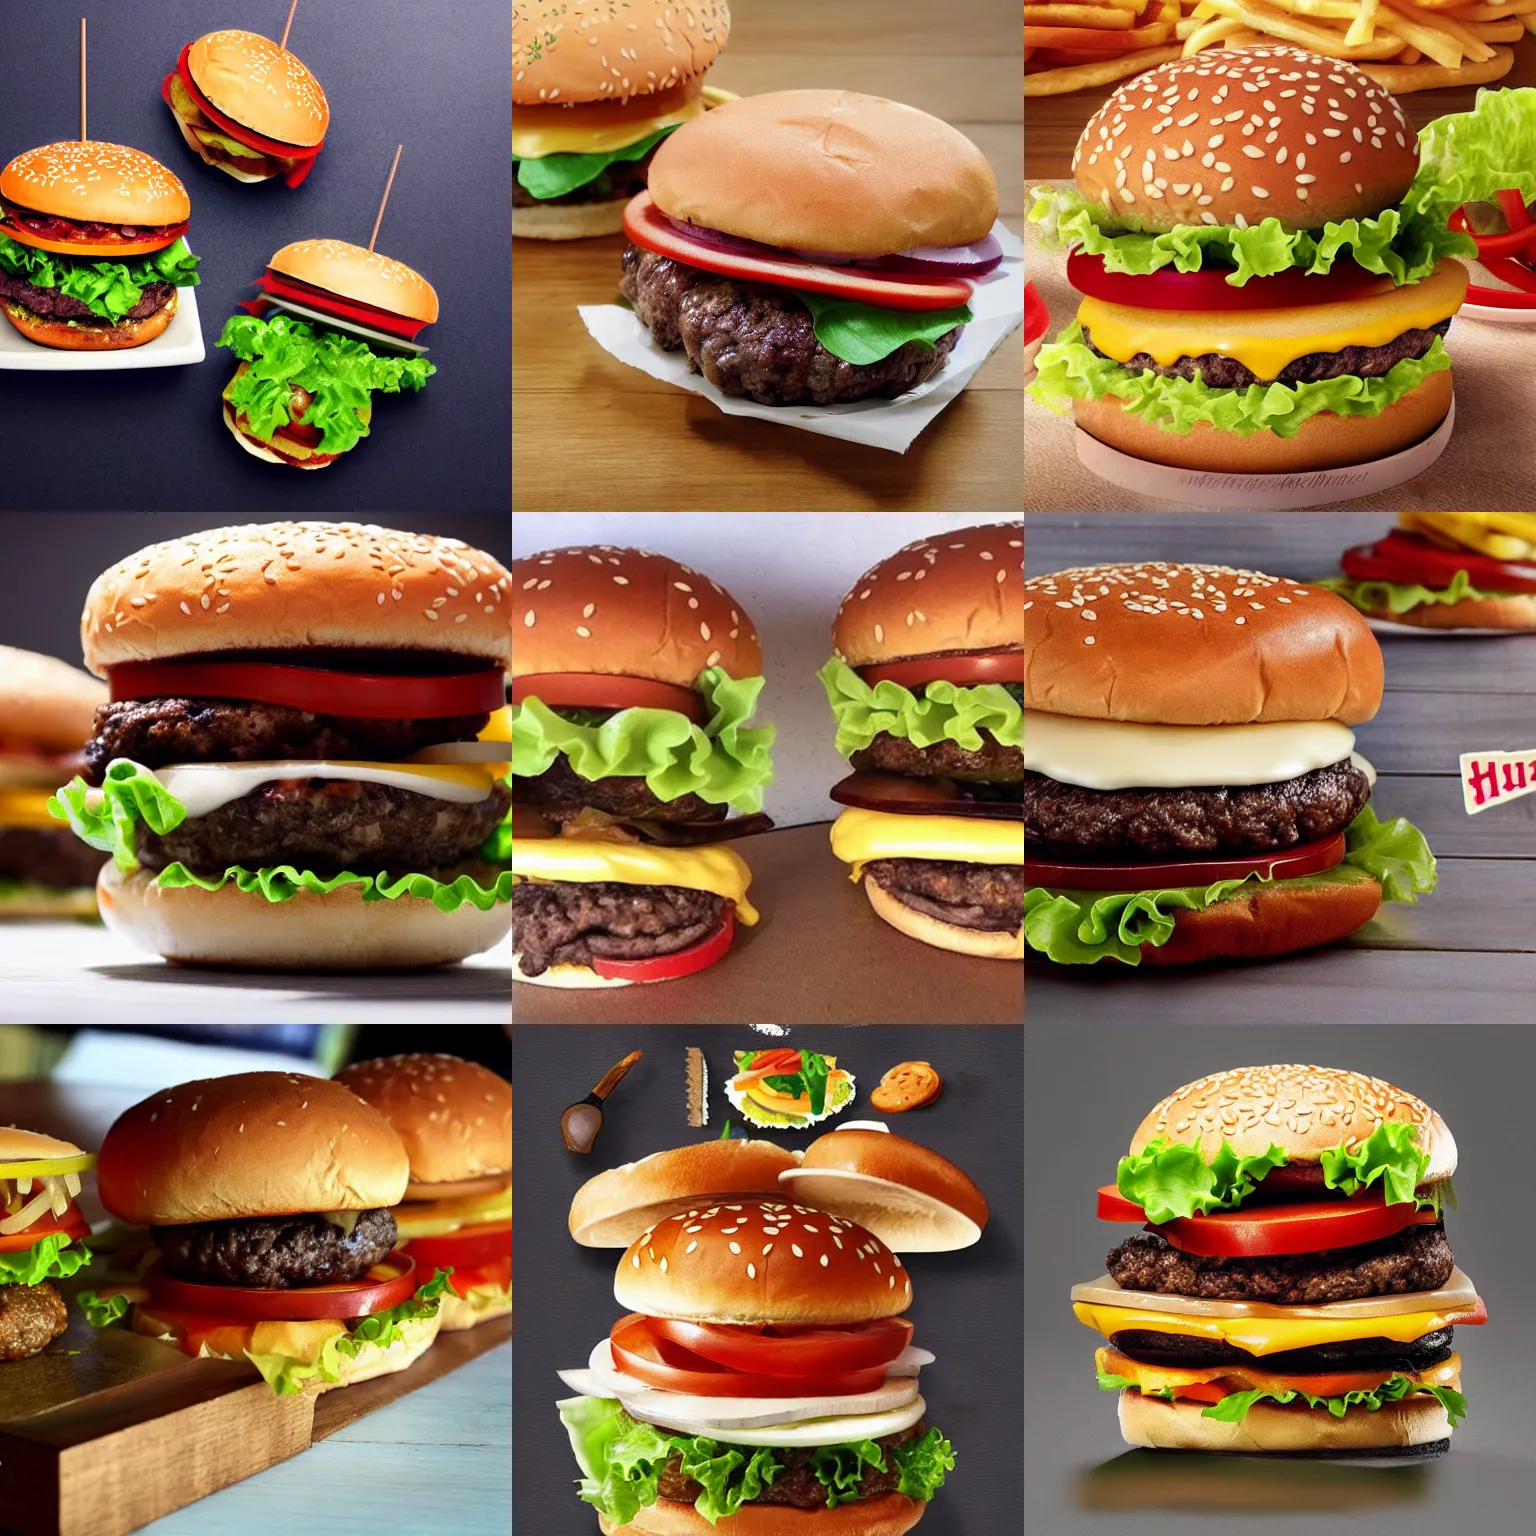 Prompt: hamburger with 1 0 burgers